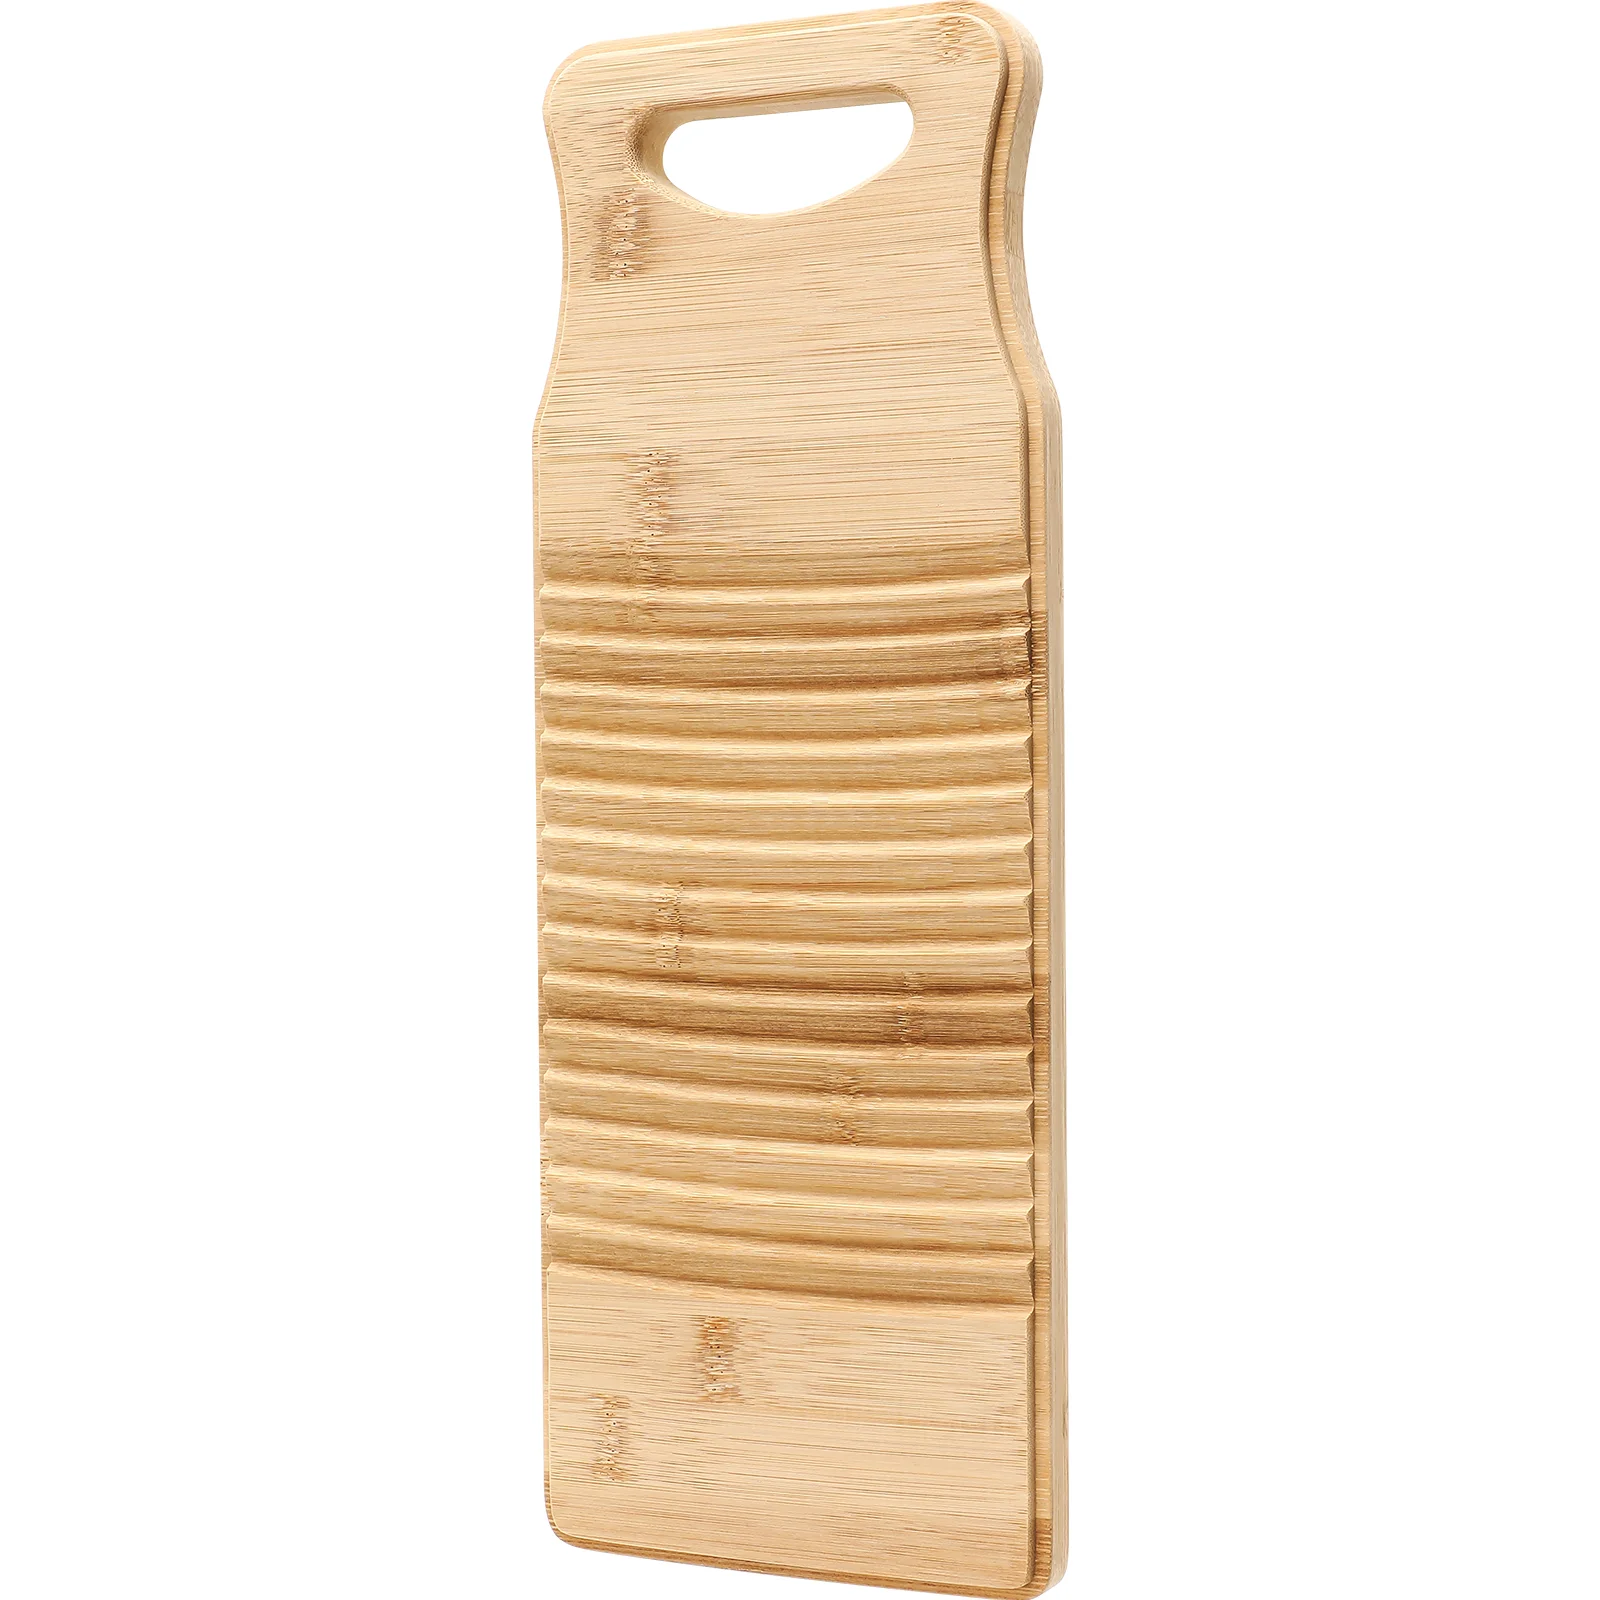 TOPBATHY de Bambus, Lemn de Spălat Washboard Non-alunecare de Acasă Spălare Spălare Placa Creative Spălătorie Bord Washboard Spălare de Mână Bord